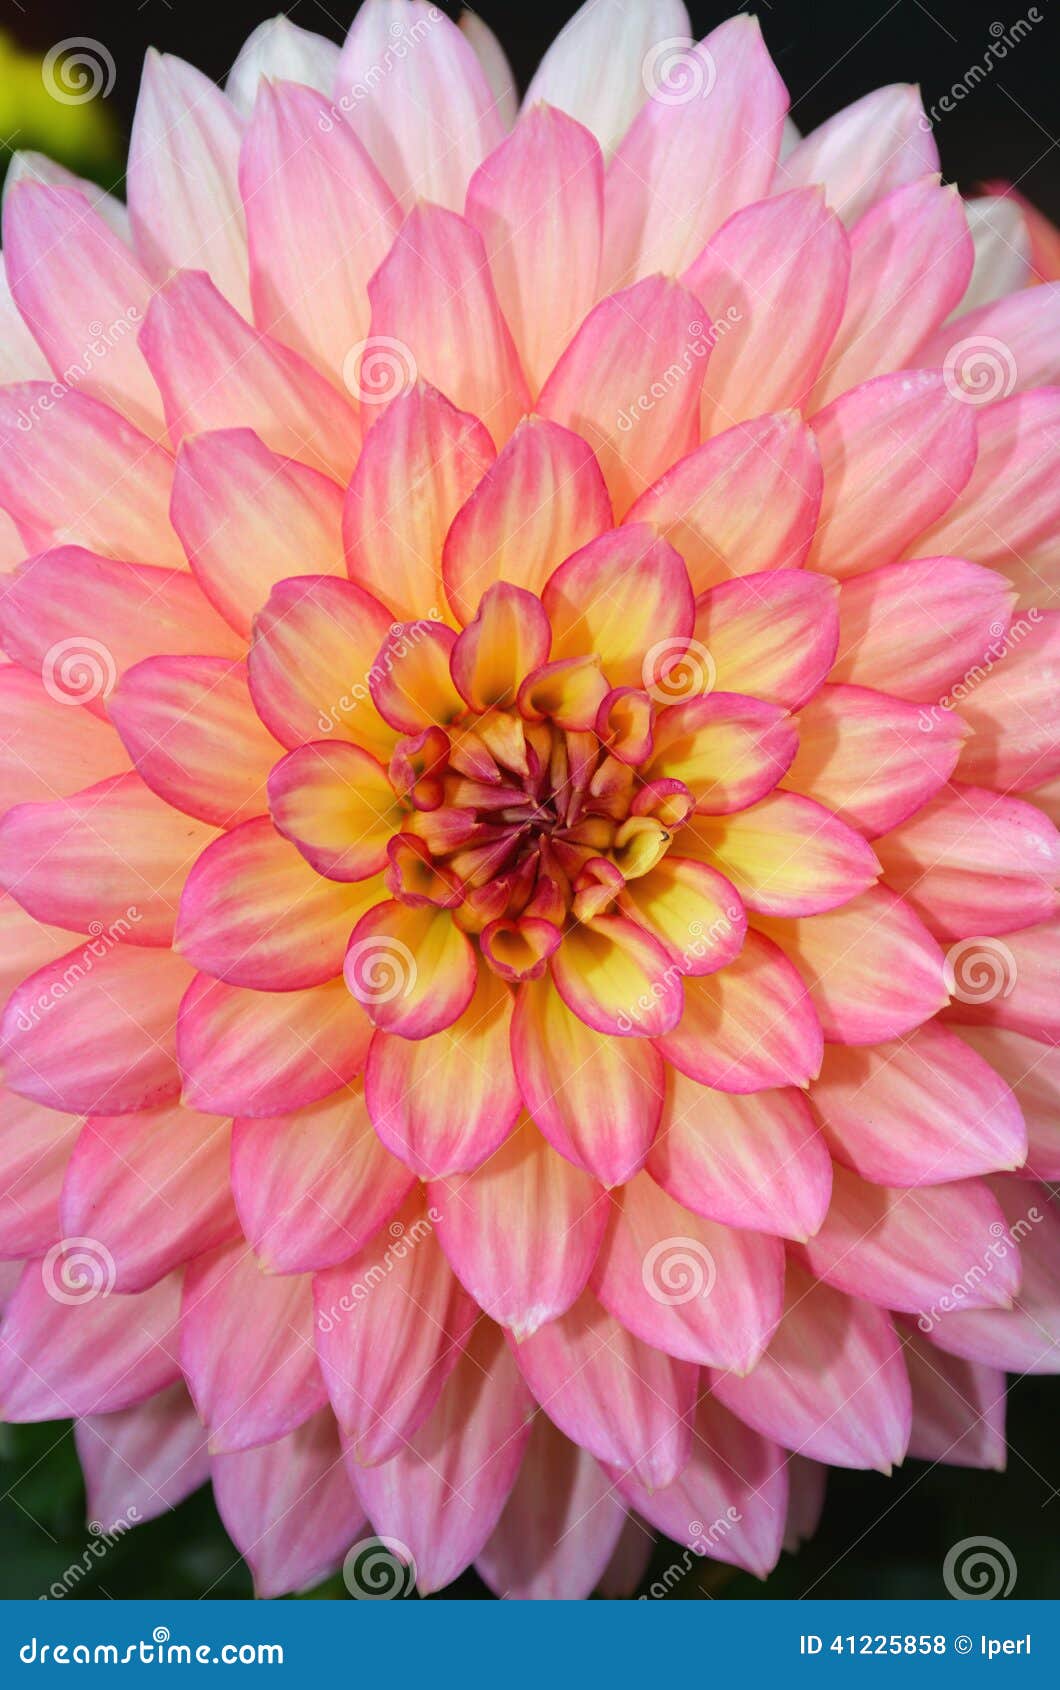 Fiori Gialli E Rosa.Pink And Yellow Dahlia Flower Stock Photo Image Of Garden